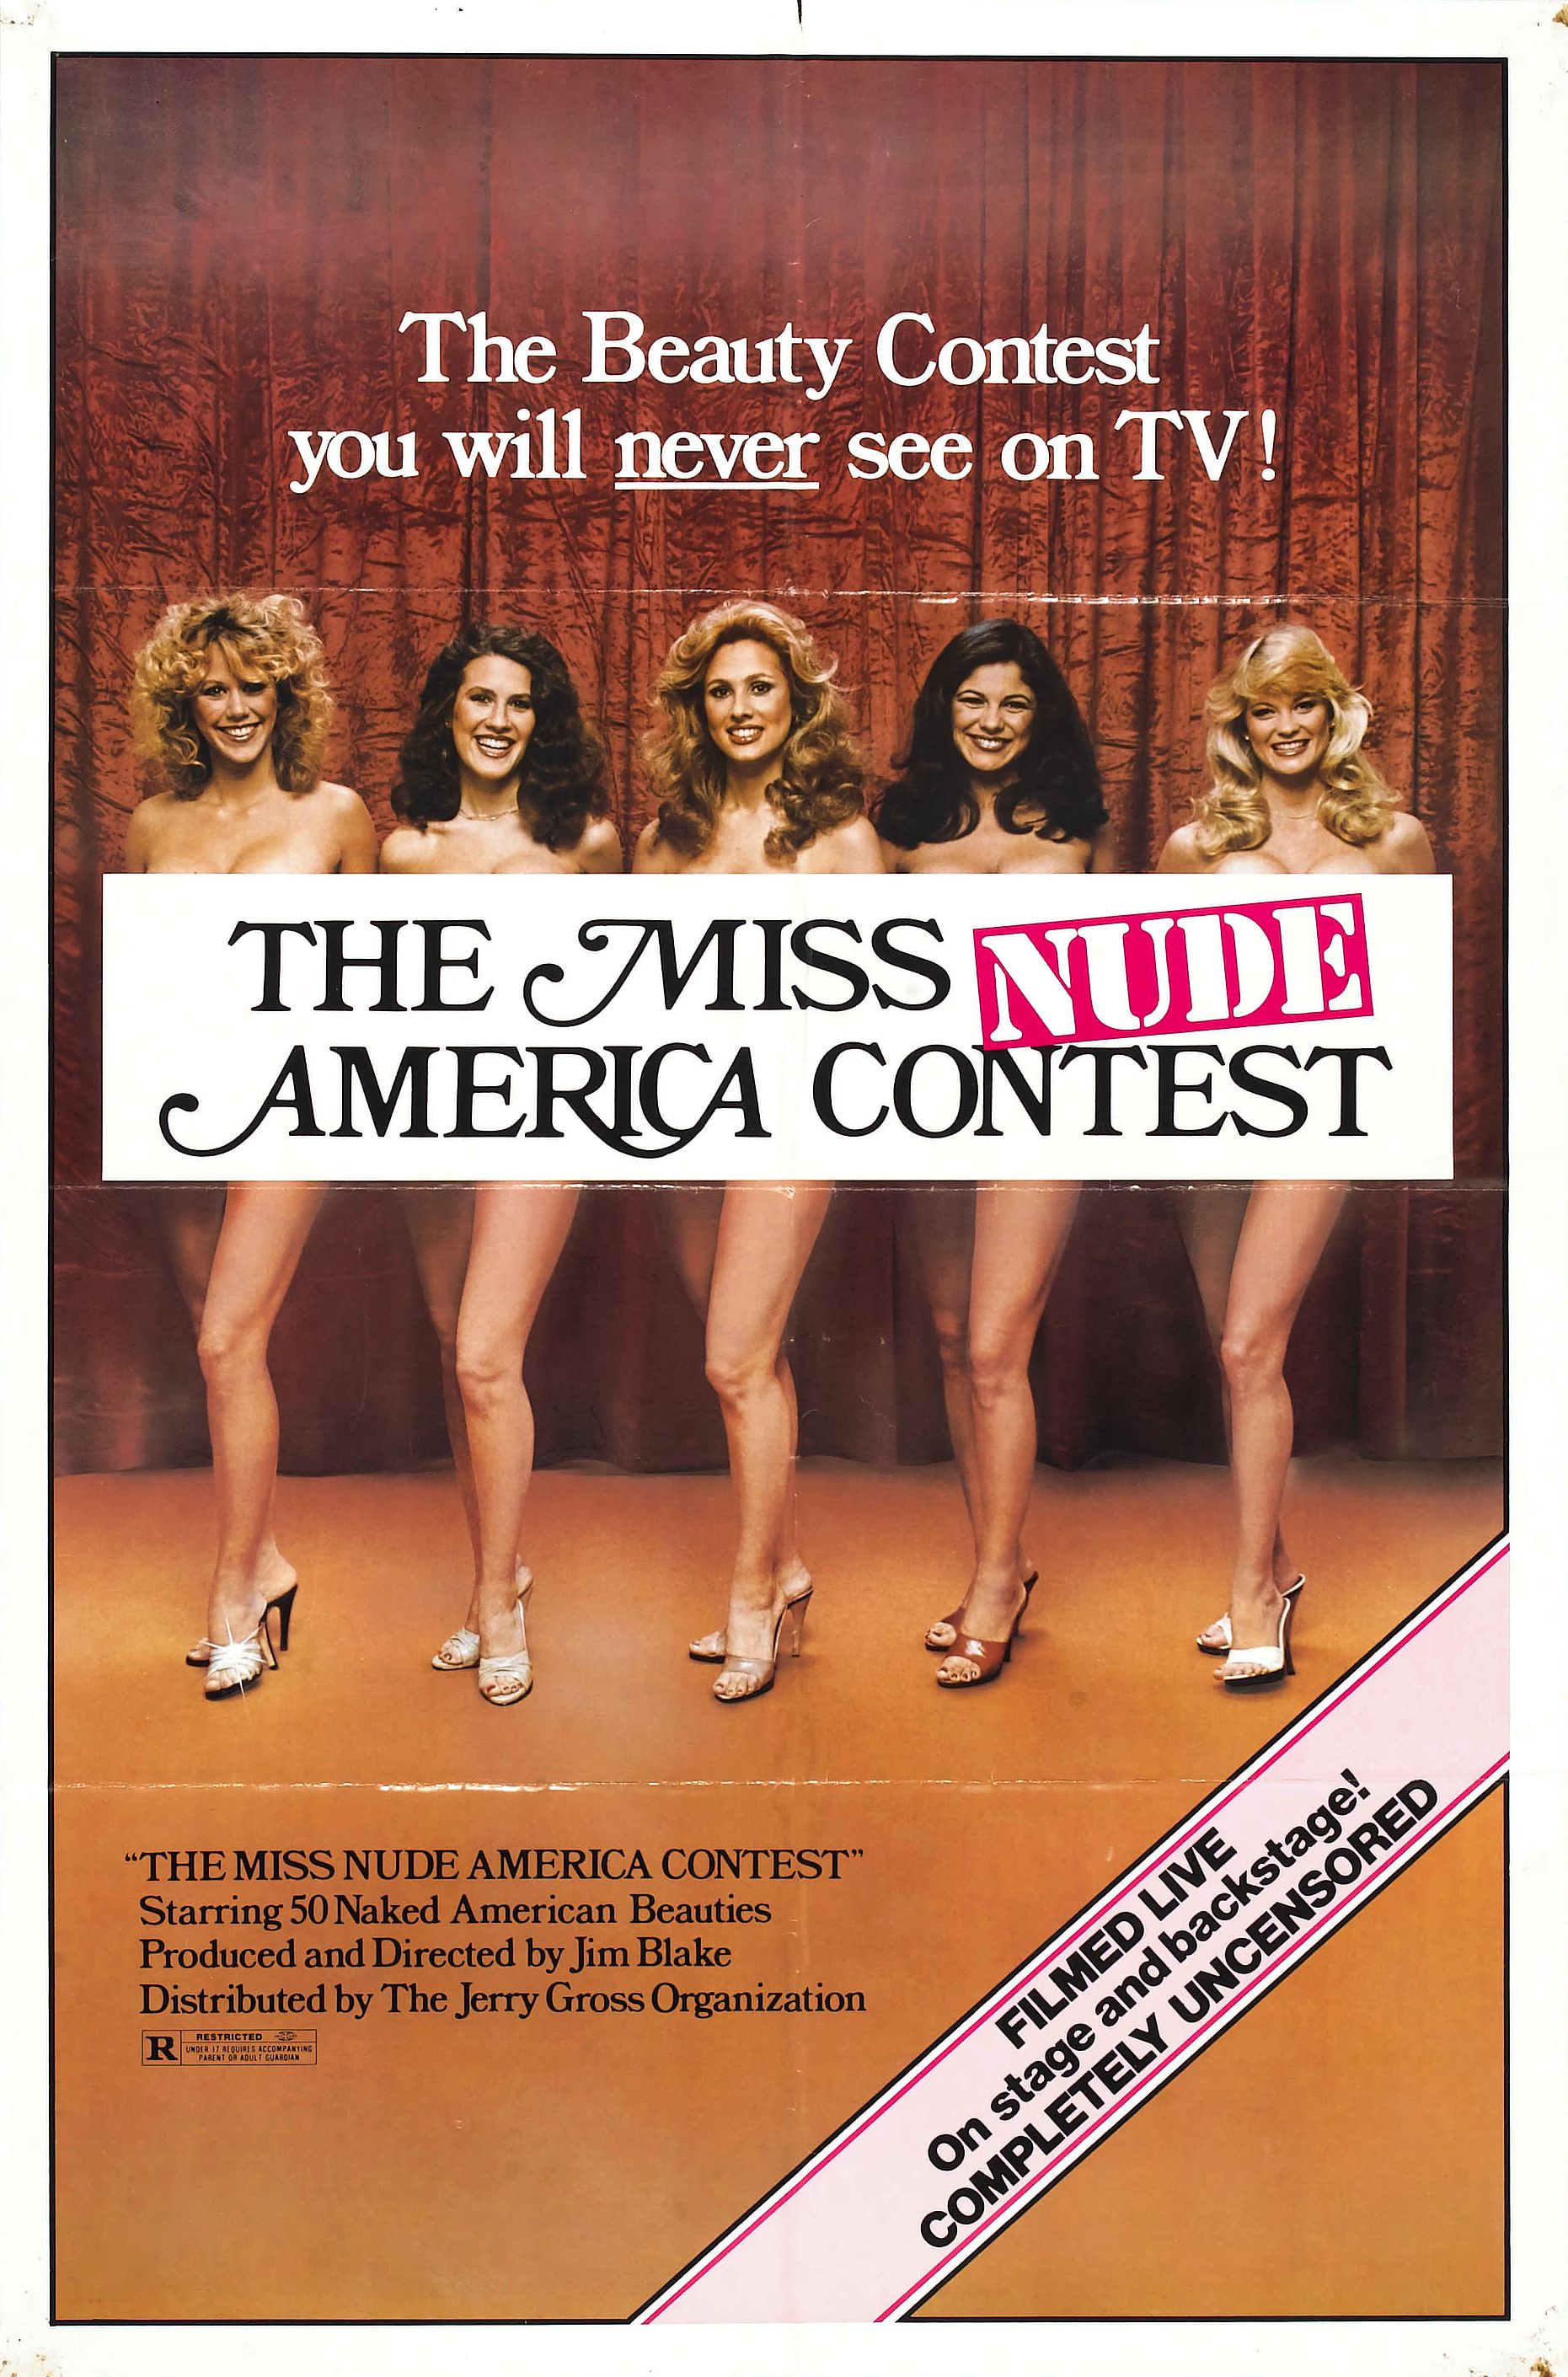 Miss nudist junior competition